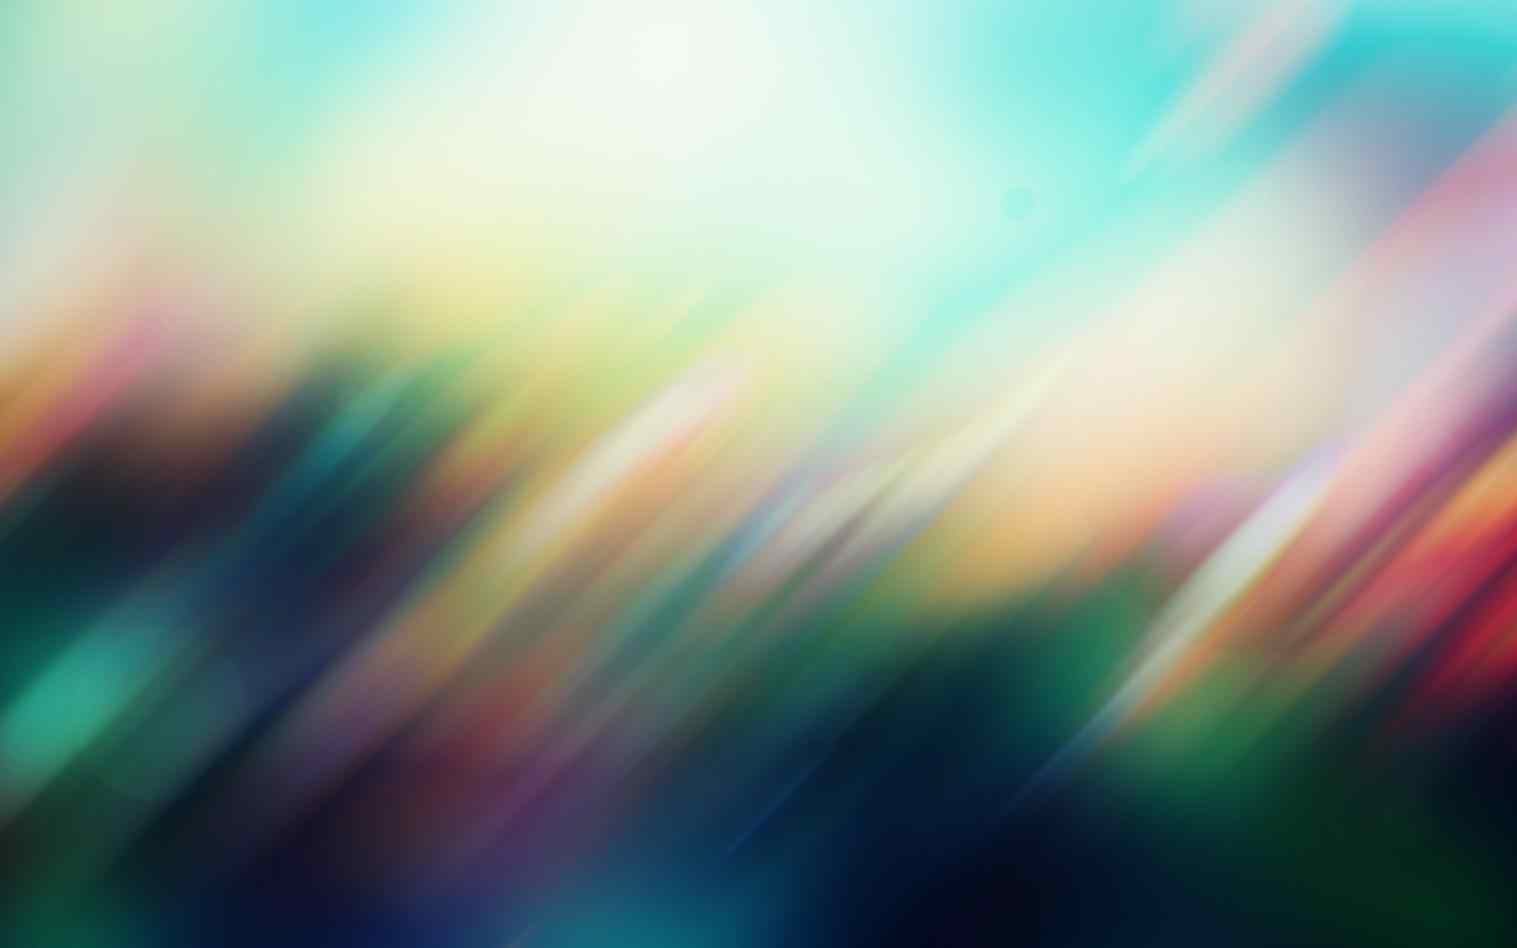 blur background wallpaper,blue,green,light,sky,colorfulness